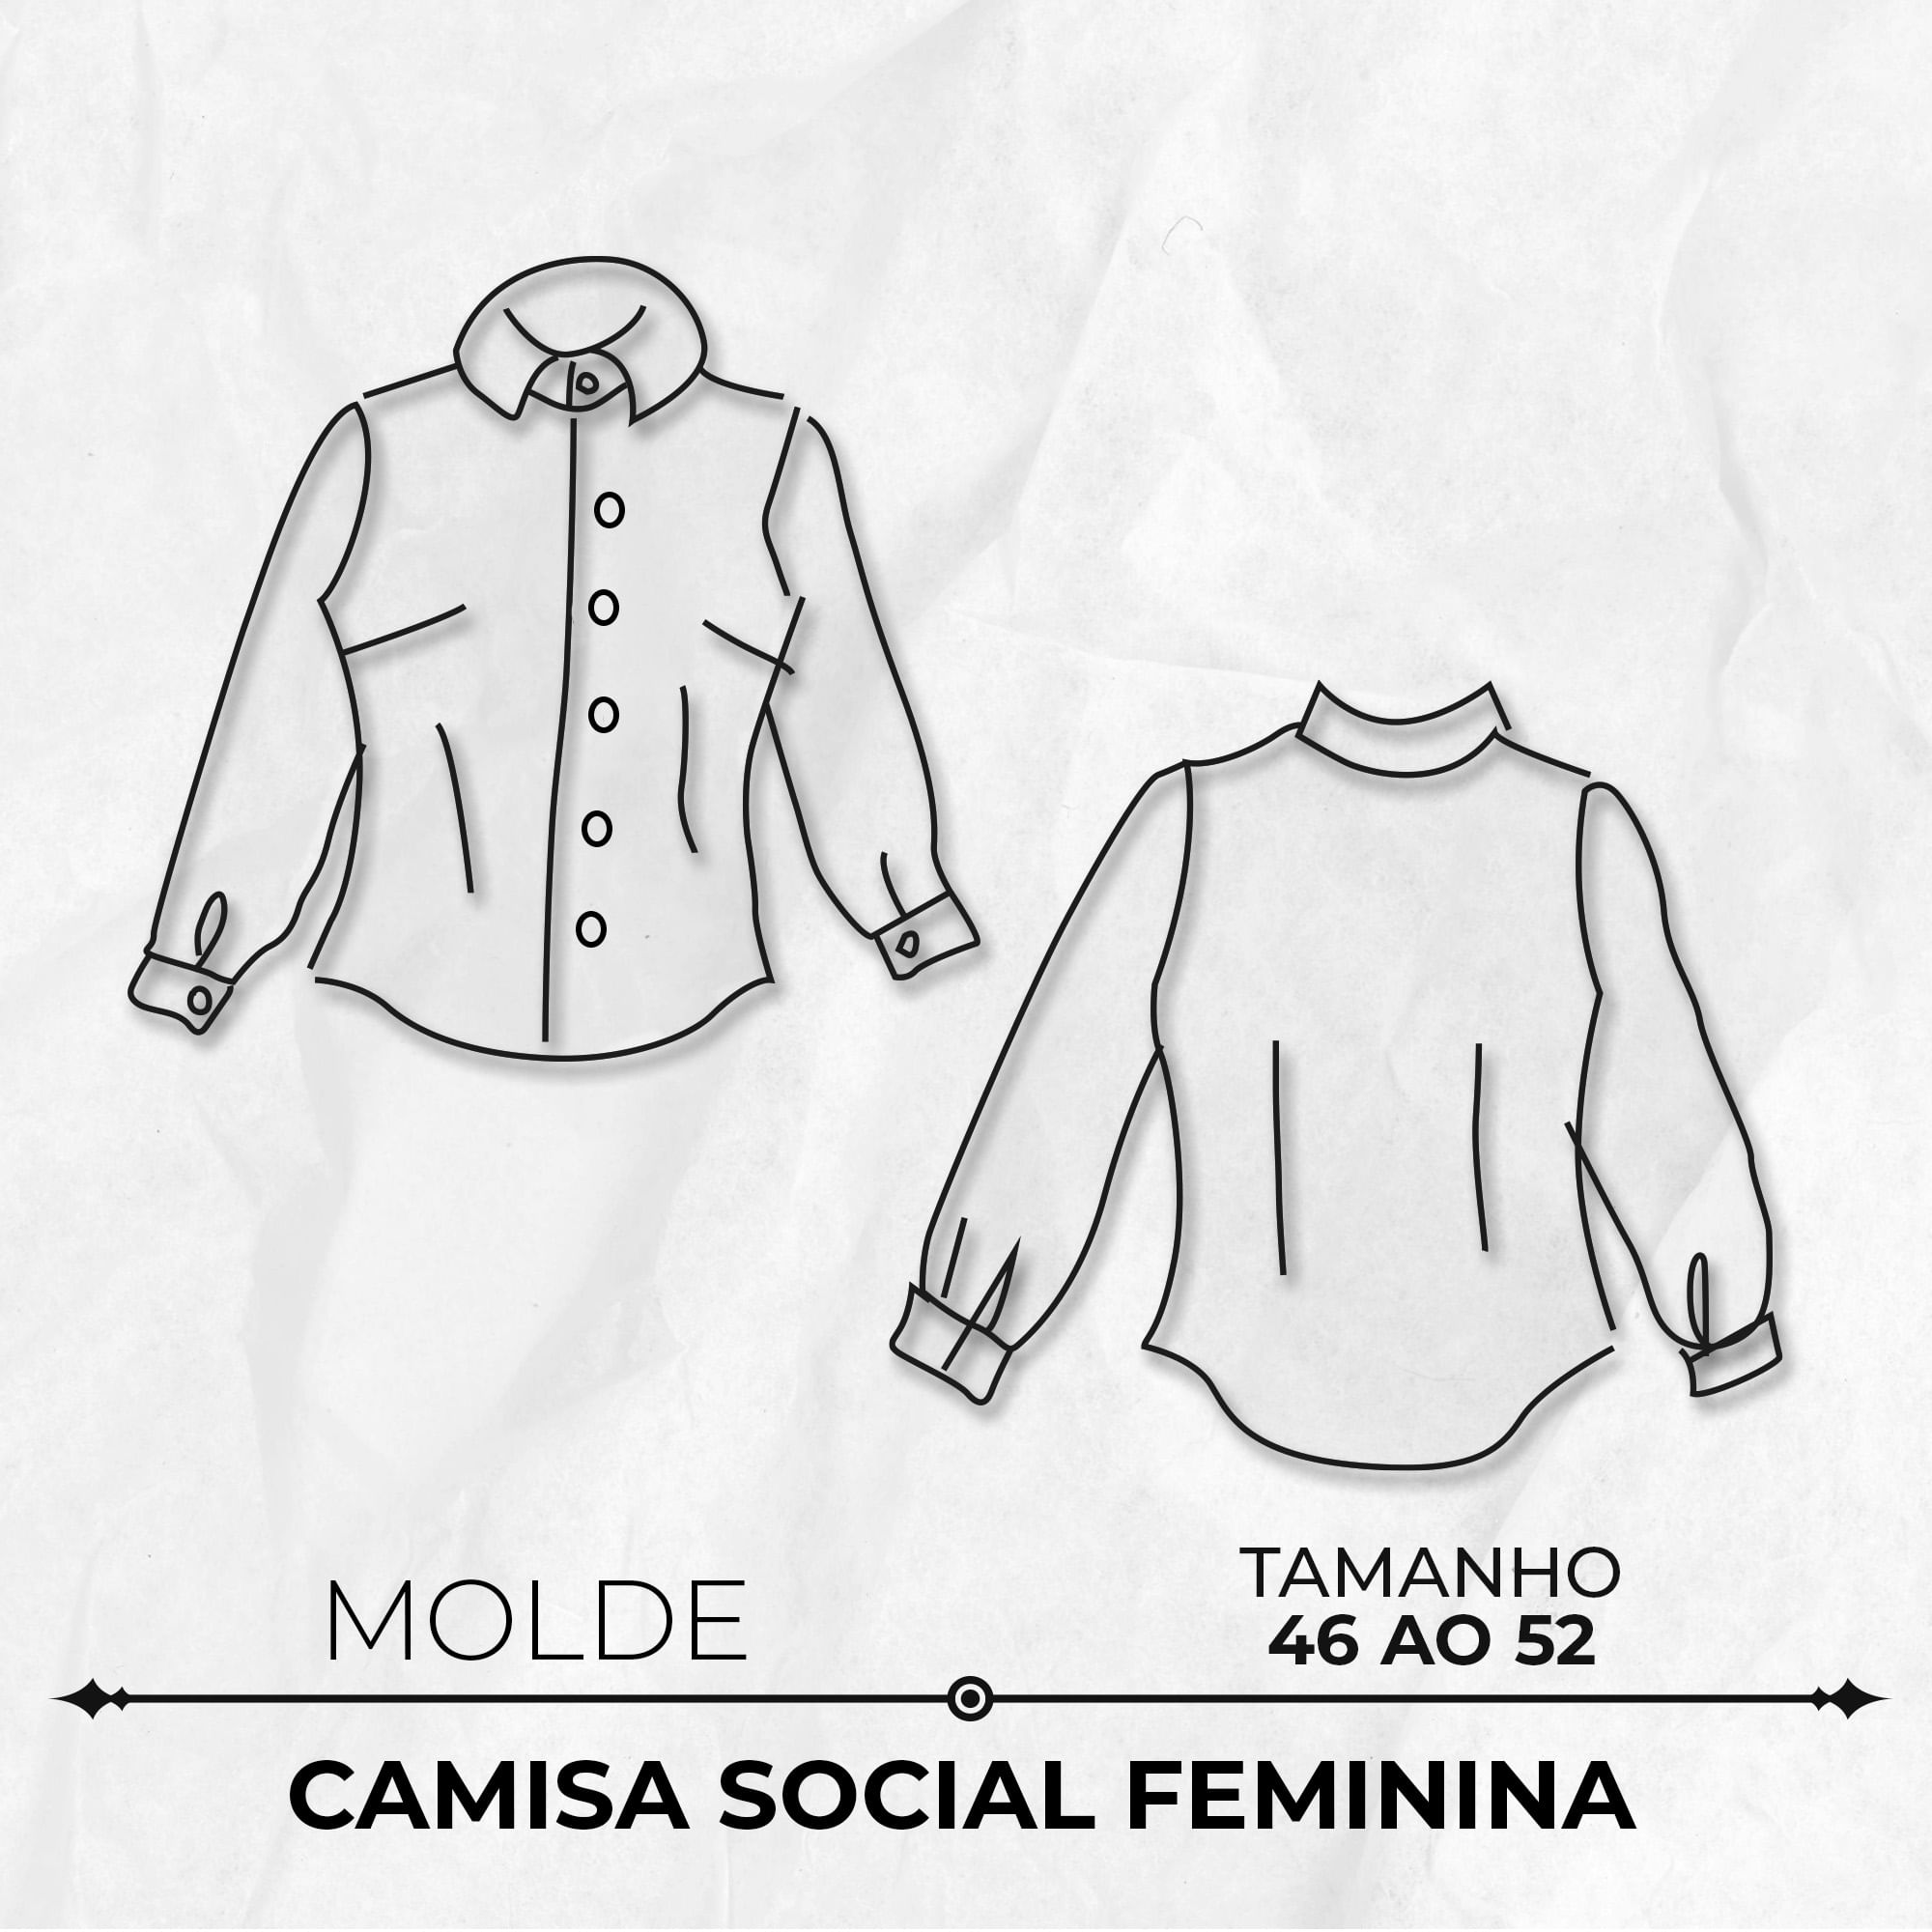 Molde-camisa-social-feminina-TM-46-ao-52-PLUS-SIZE-Ref-13386-1